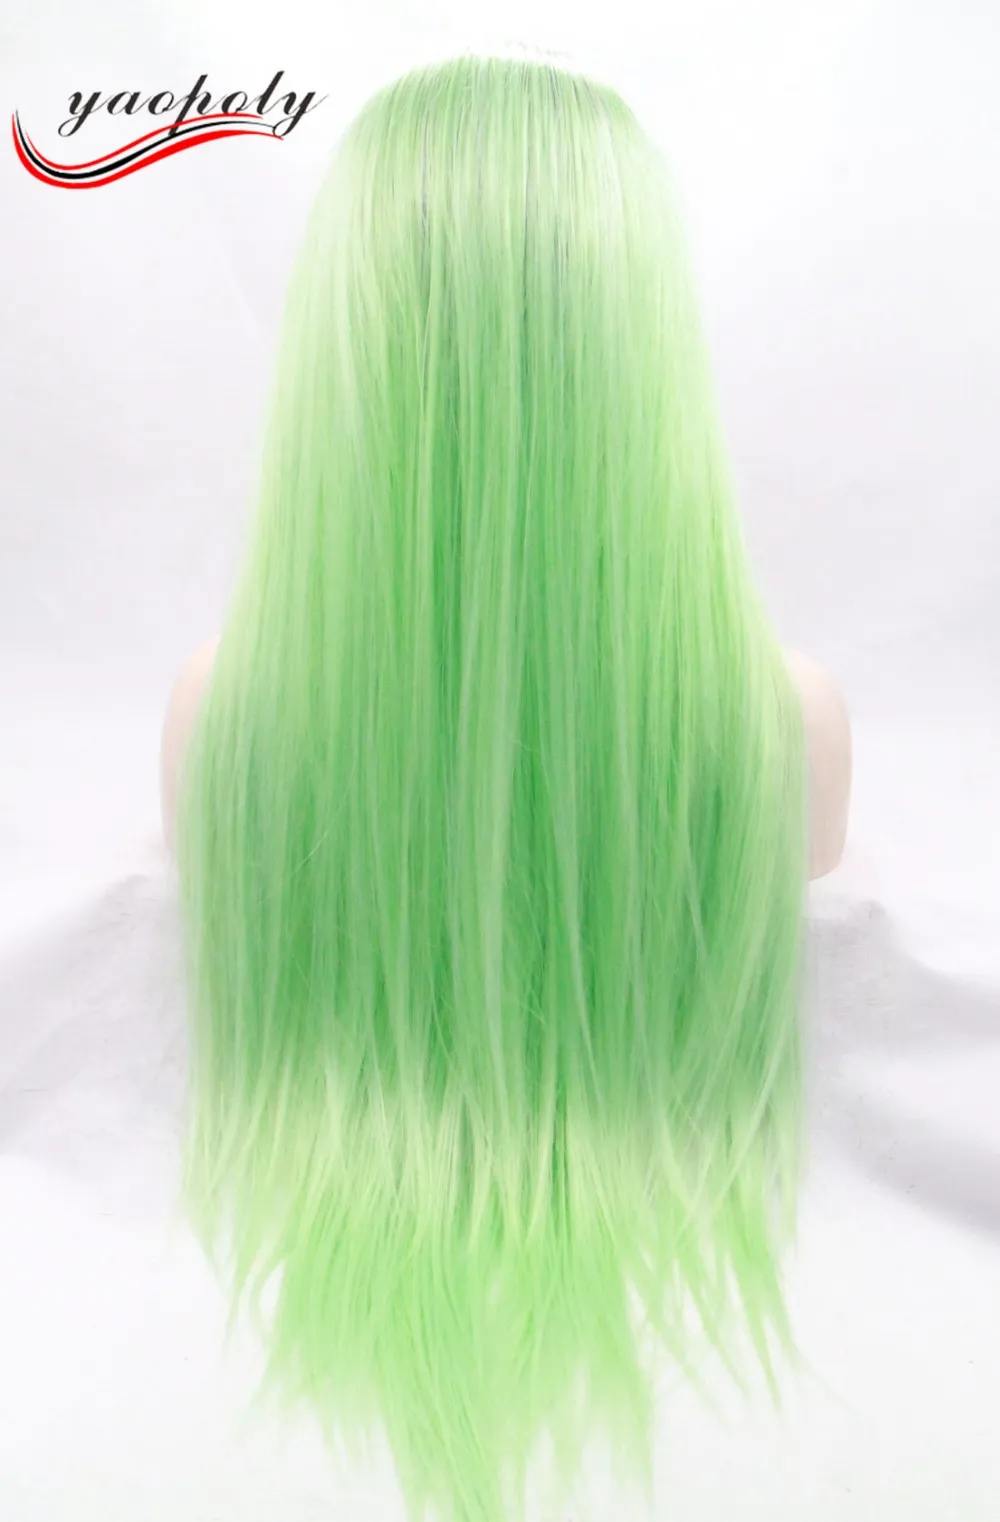 green wig